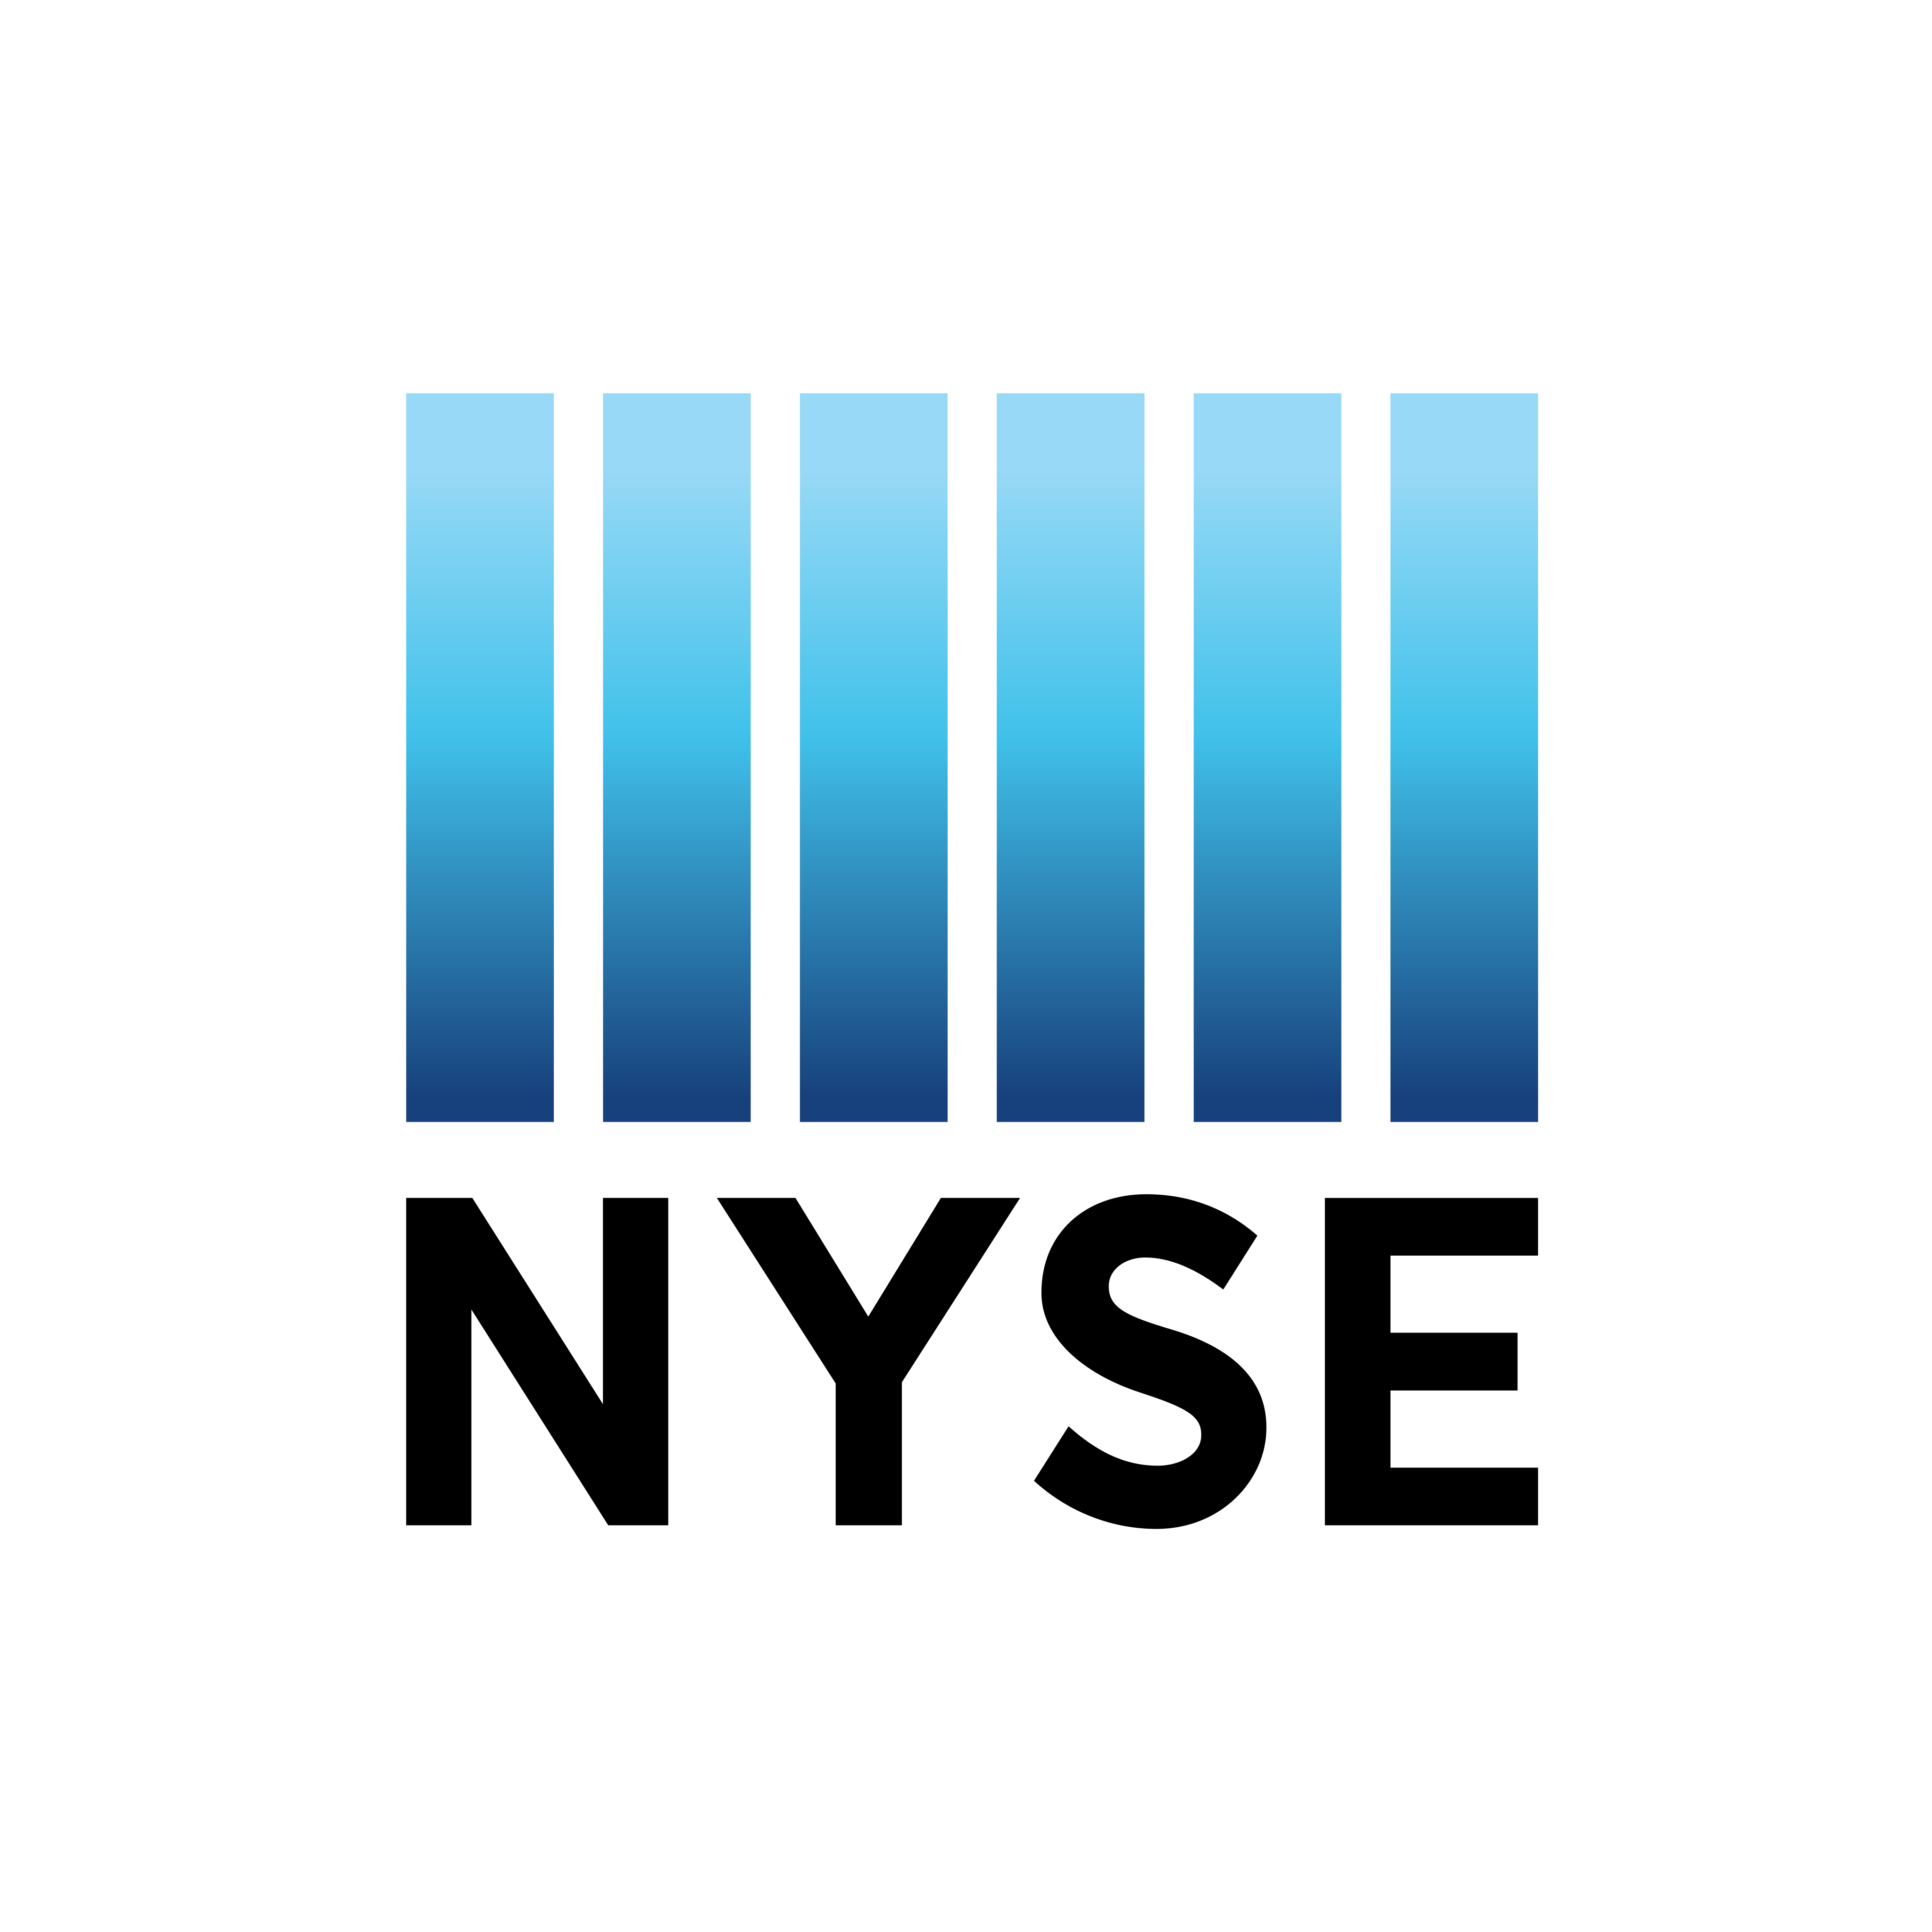 nyse logo 0 - NYSE Logo – New York Stock Exchange